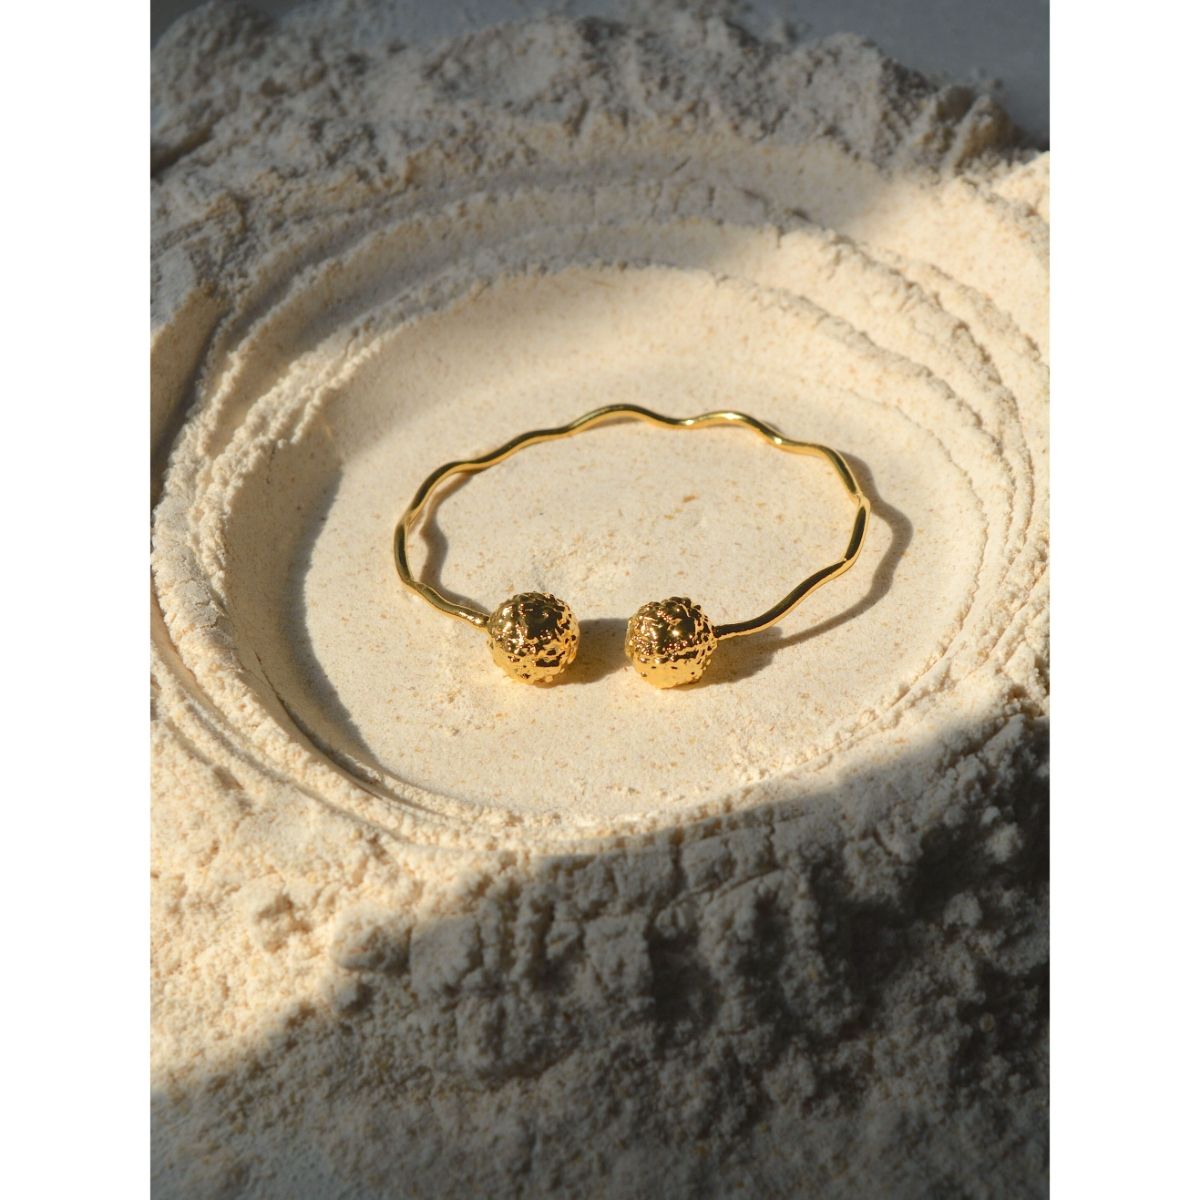 Buy Gold Bracelet Mens Bracelet Gold 24K Gold Plated Online in India  Etsy